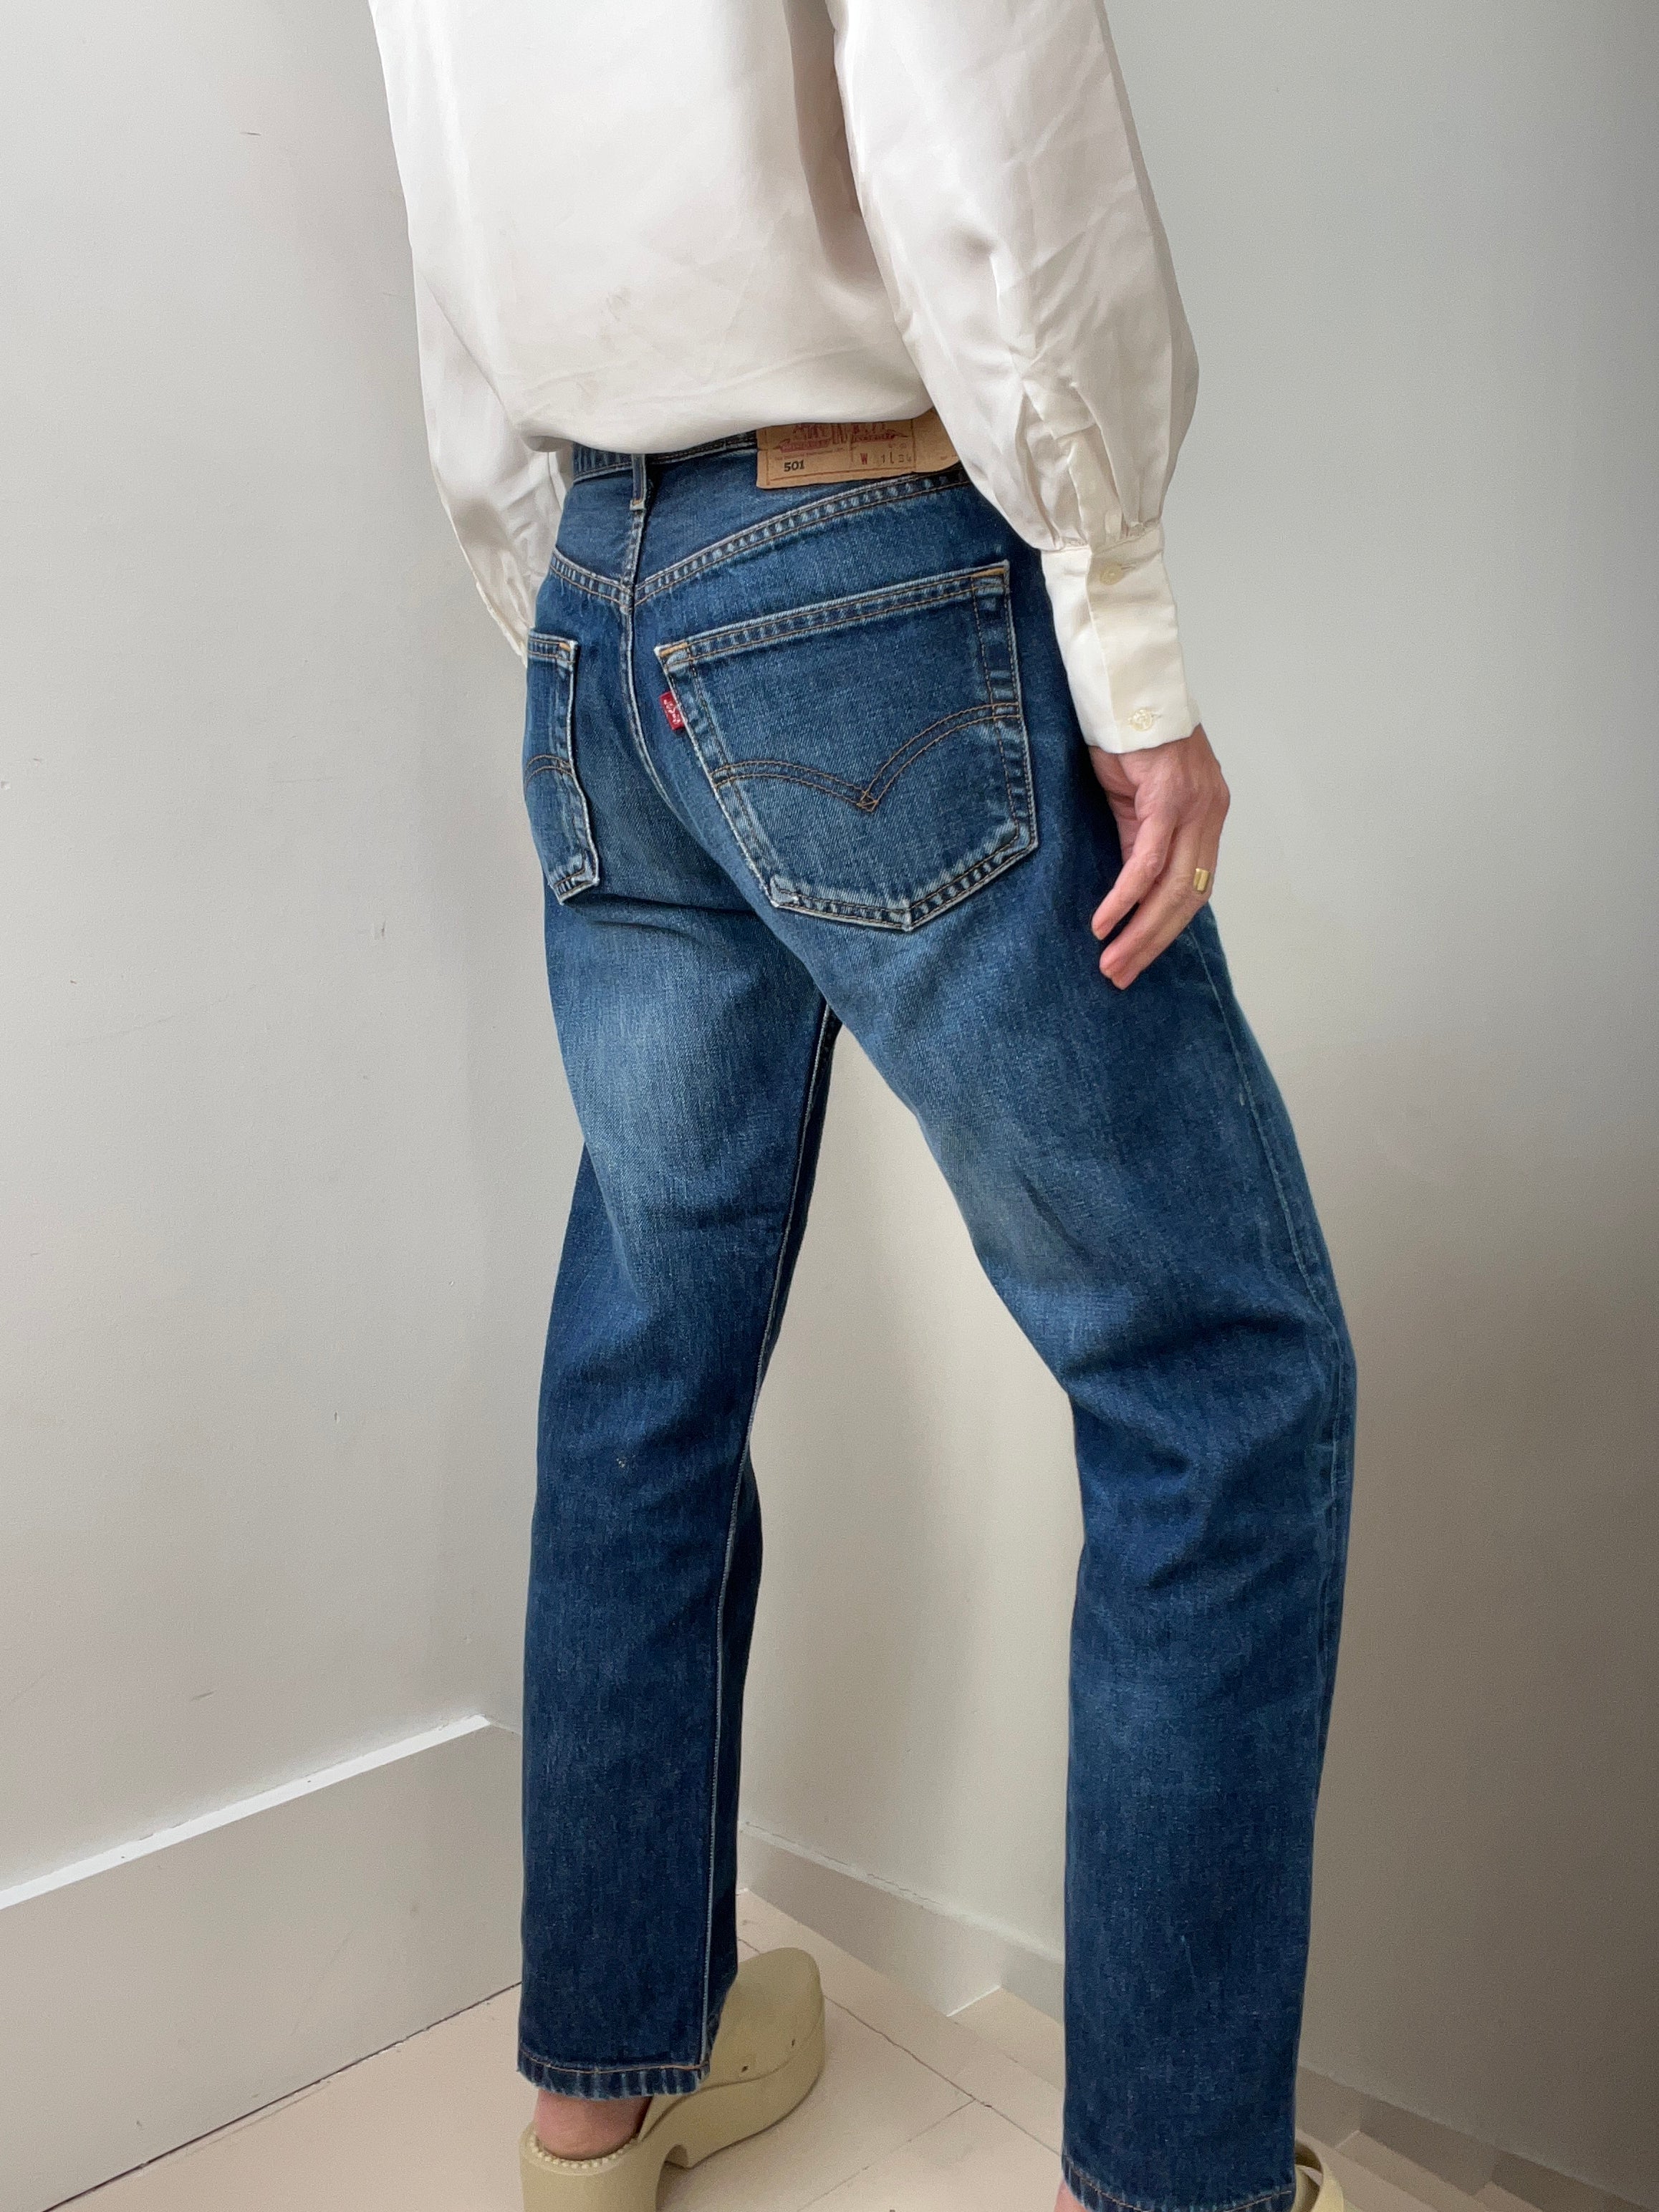 Levis Jeans | Jetsetbohemian